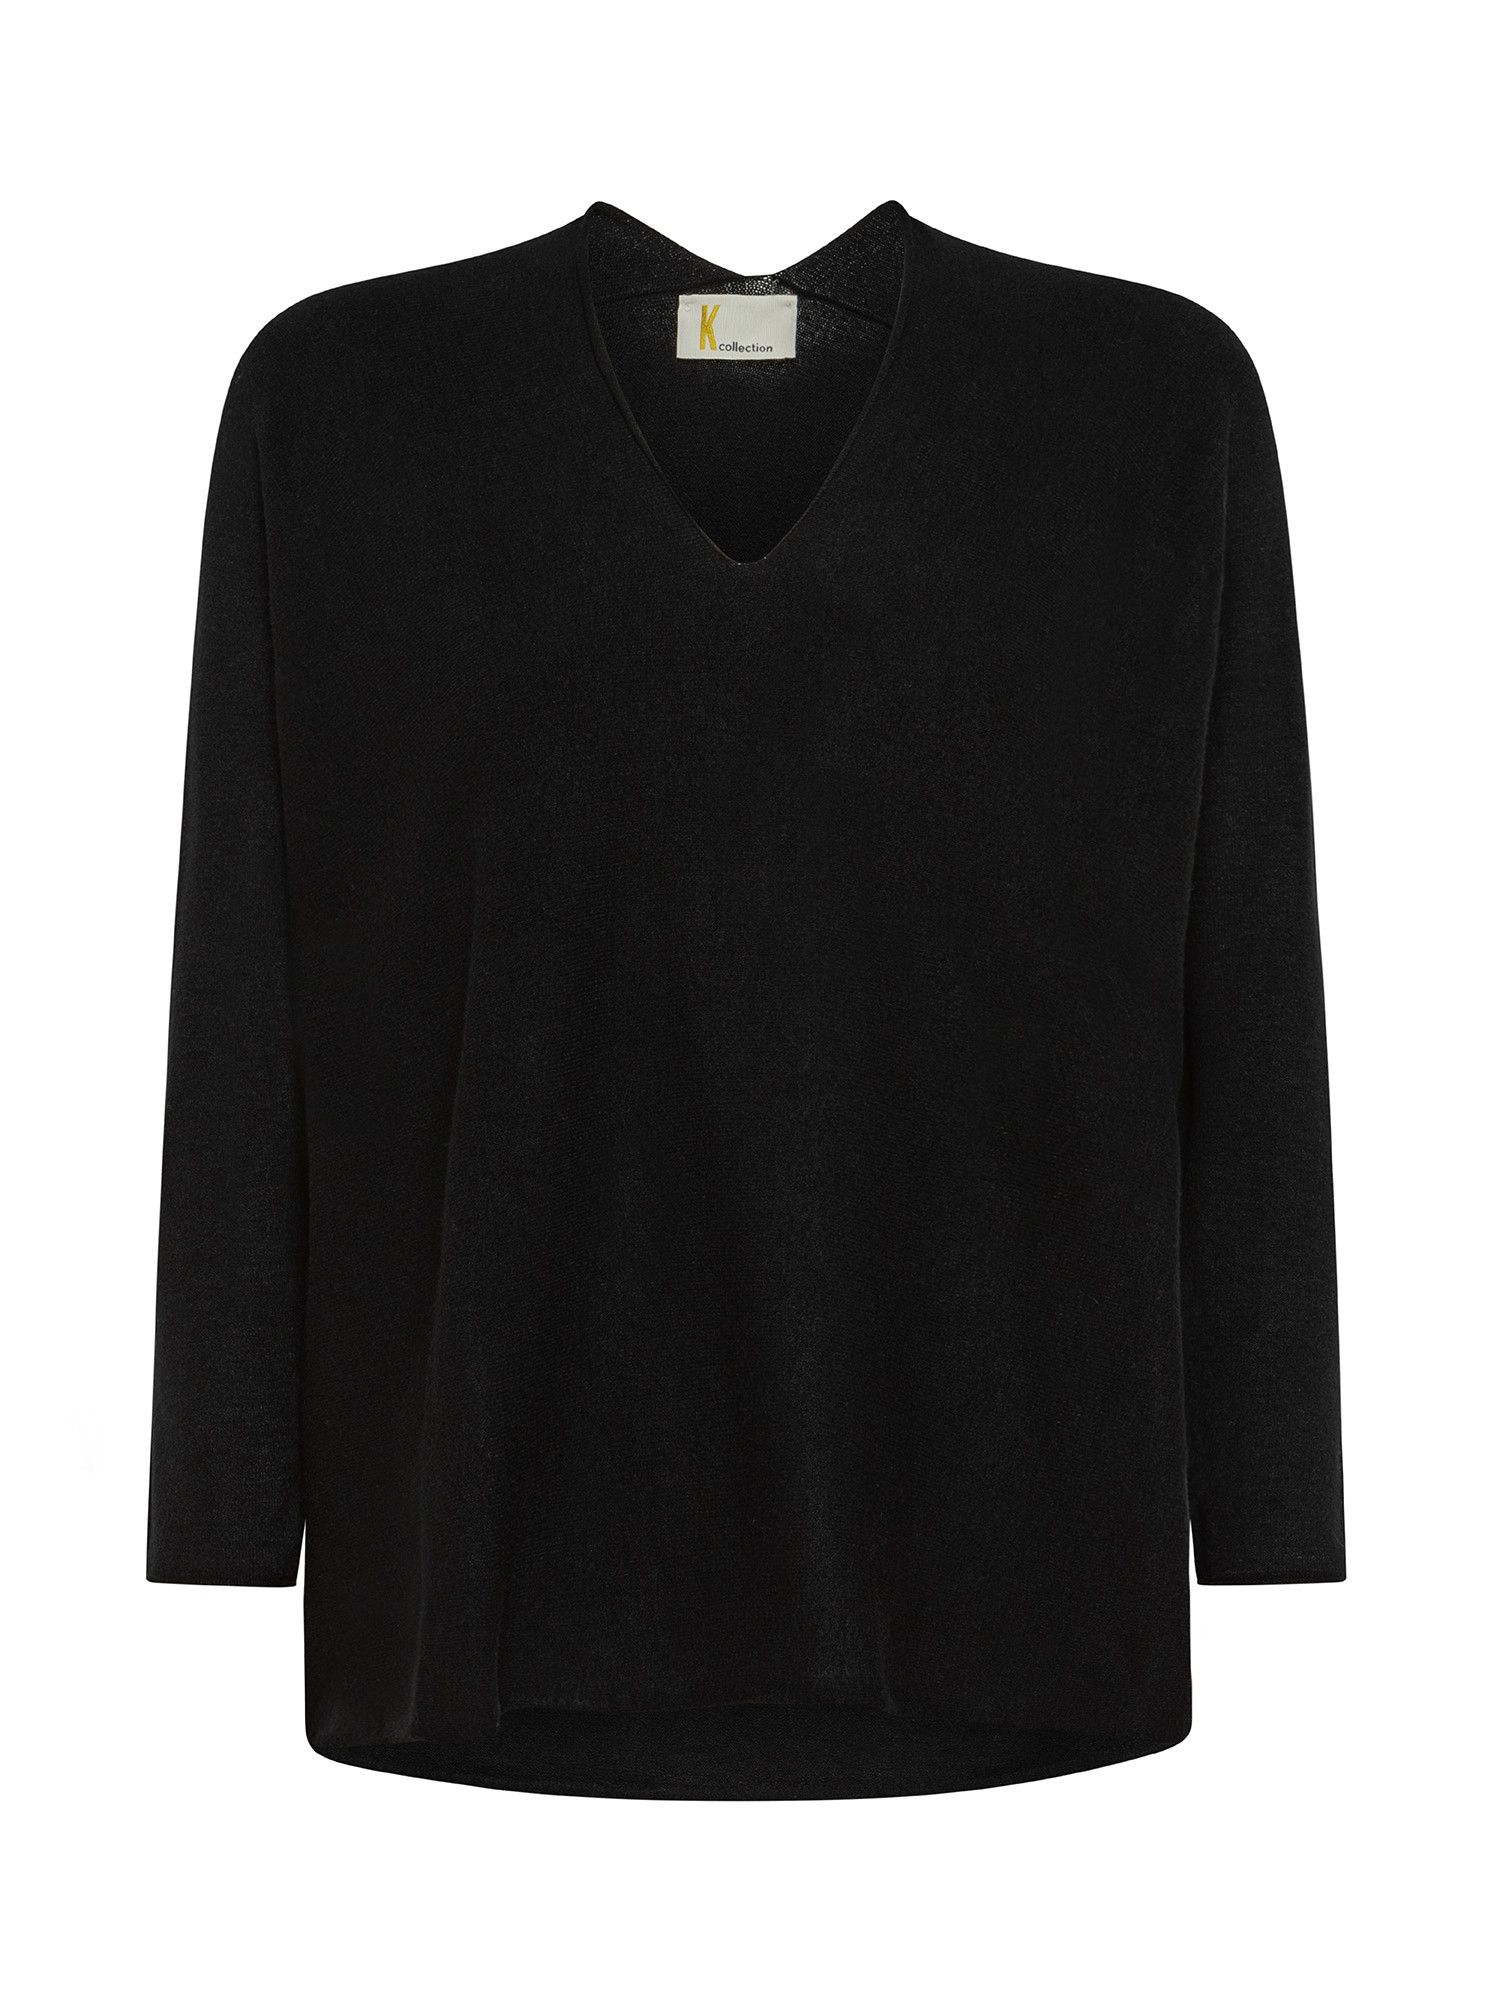 K Collection - Pullover, Black, large image number 0